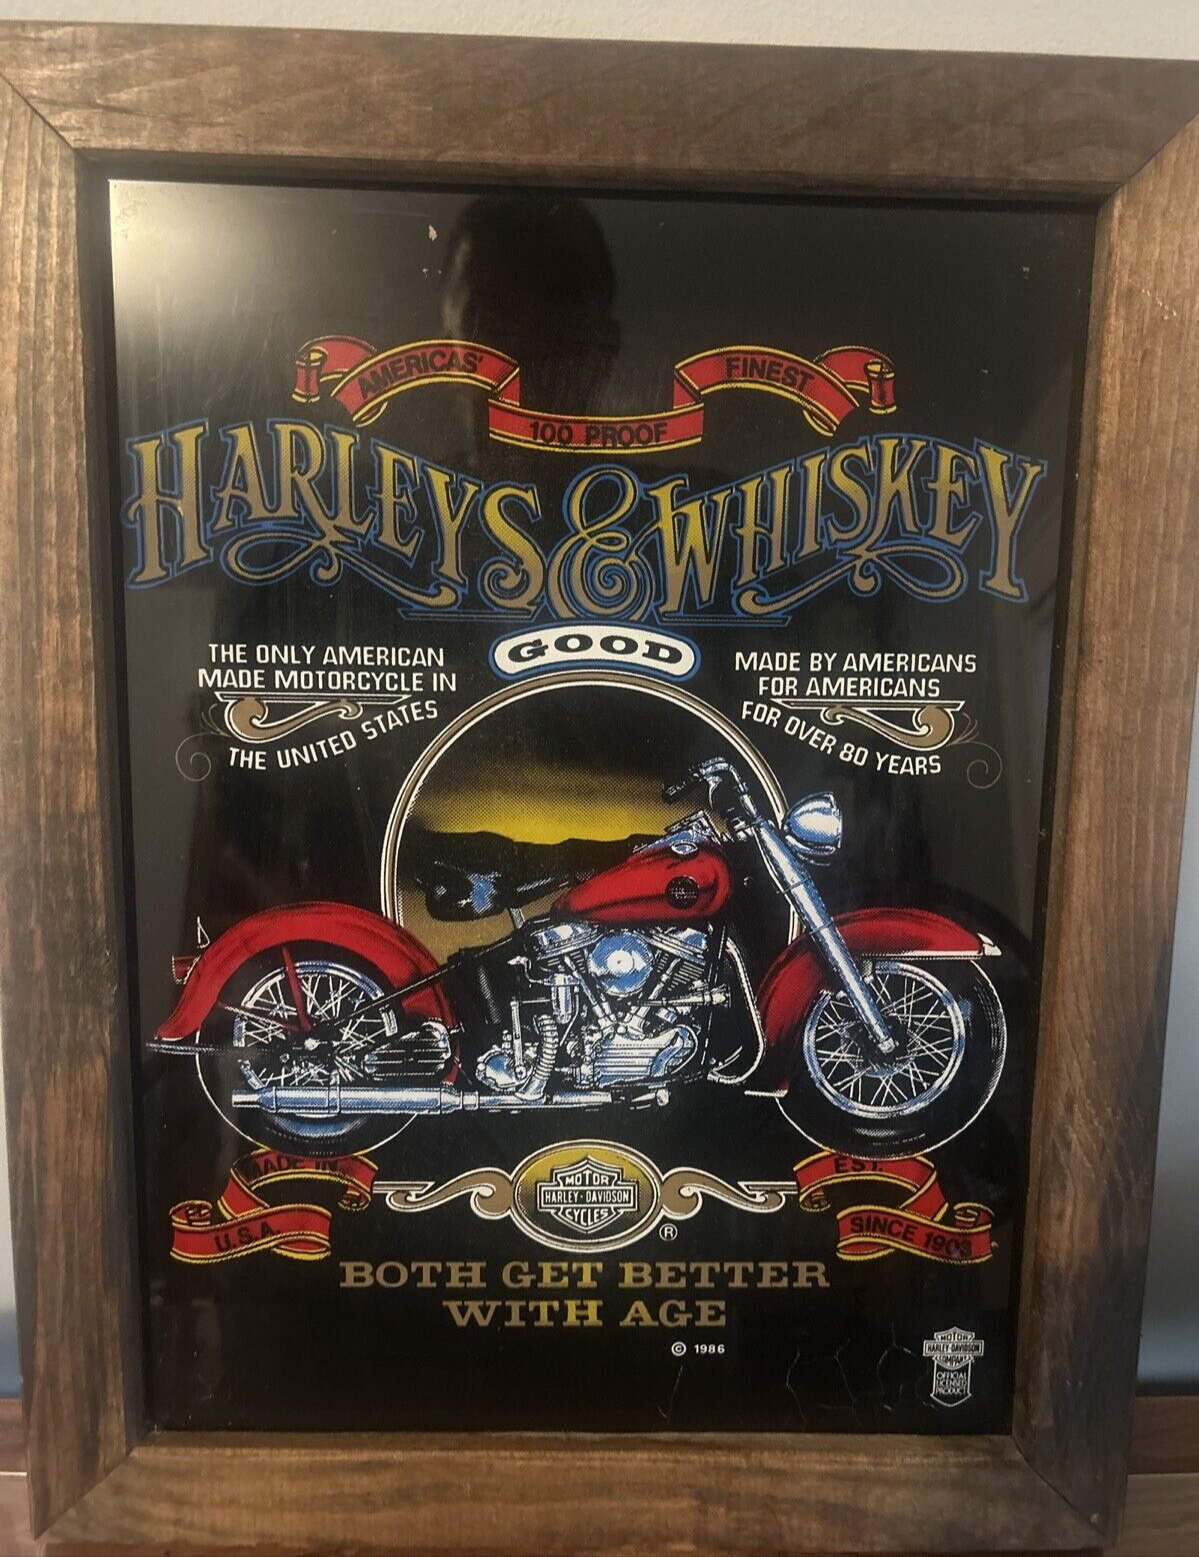 Harley Davidson Motorcycles Framed Picture Harley’s & Whiskey 1986 Wood Frame